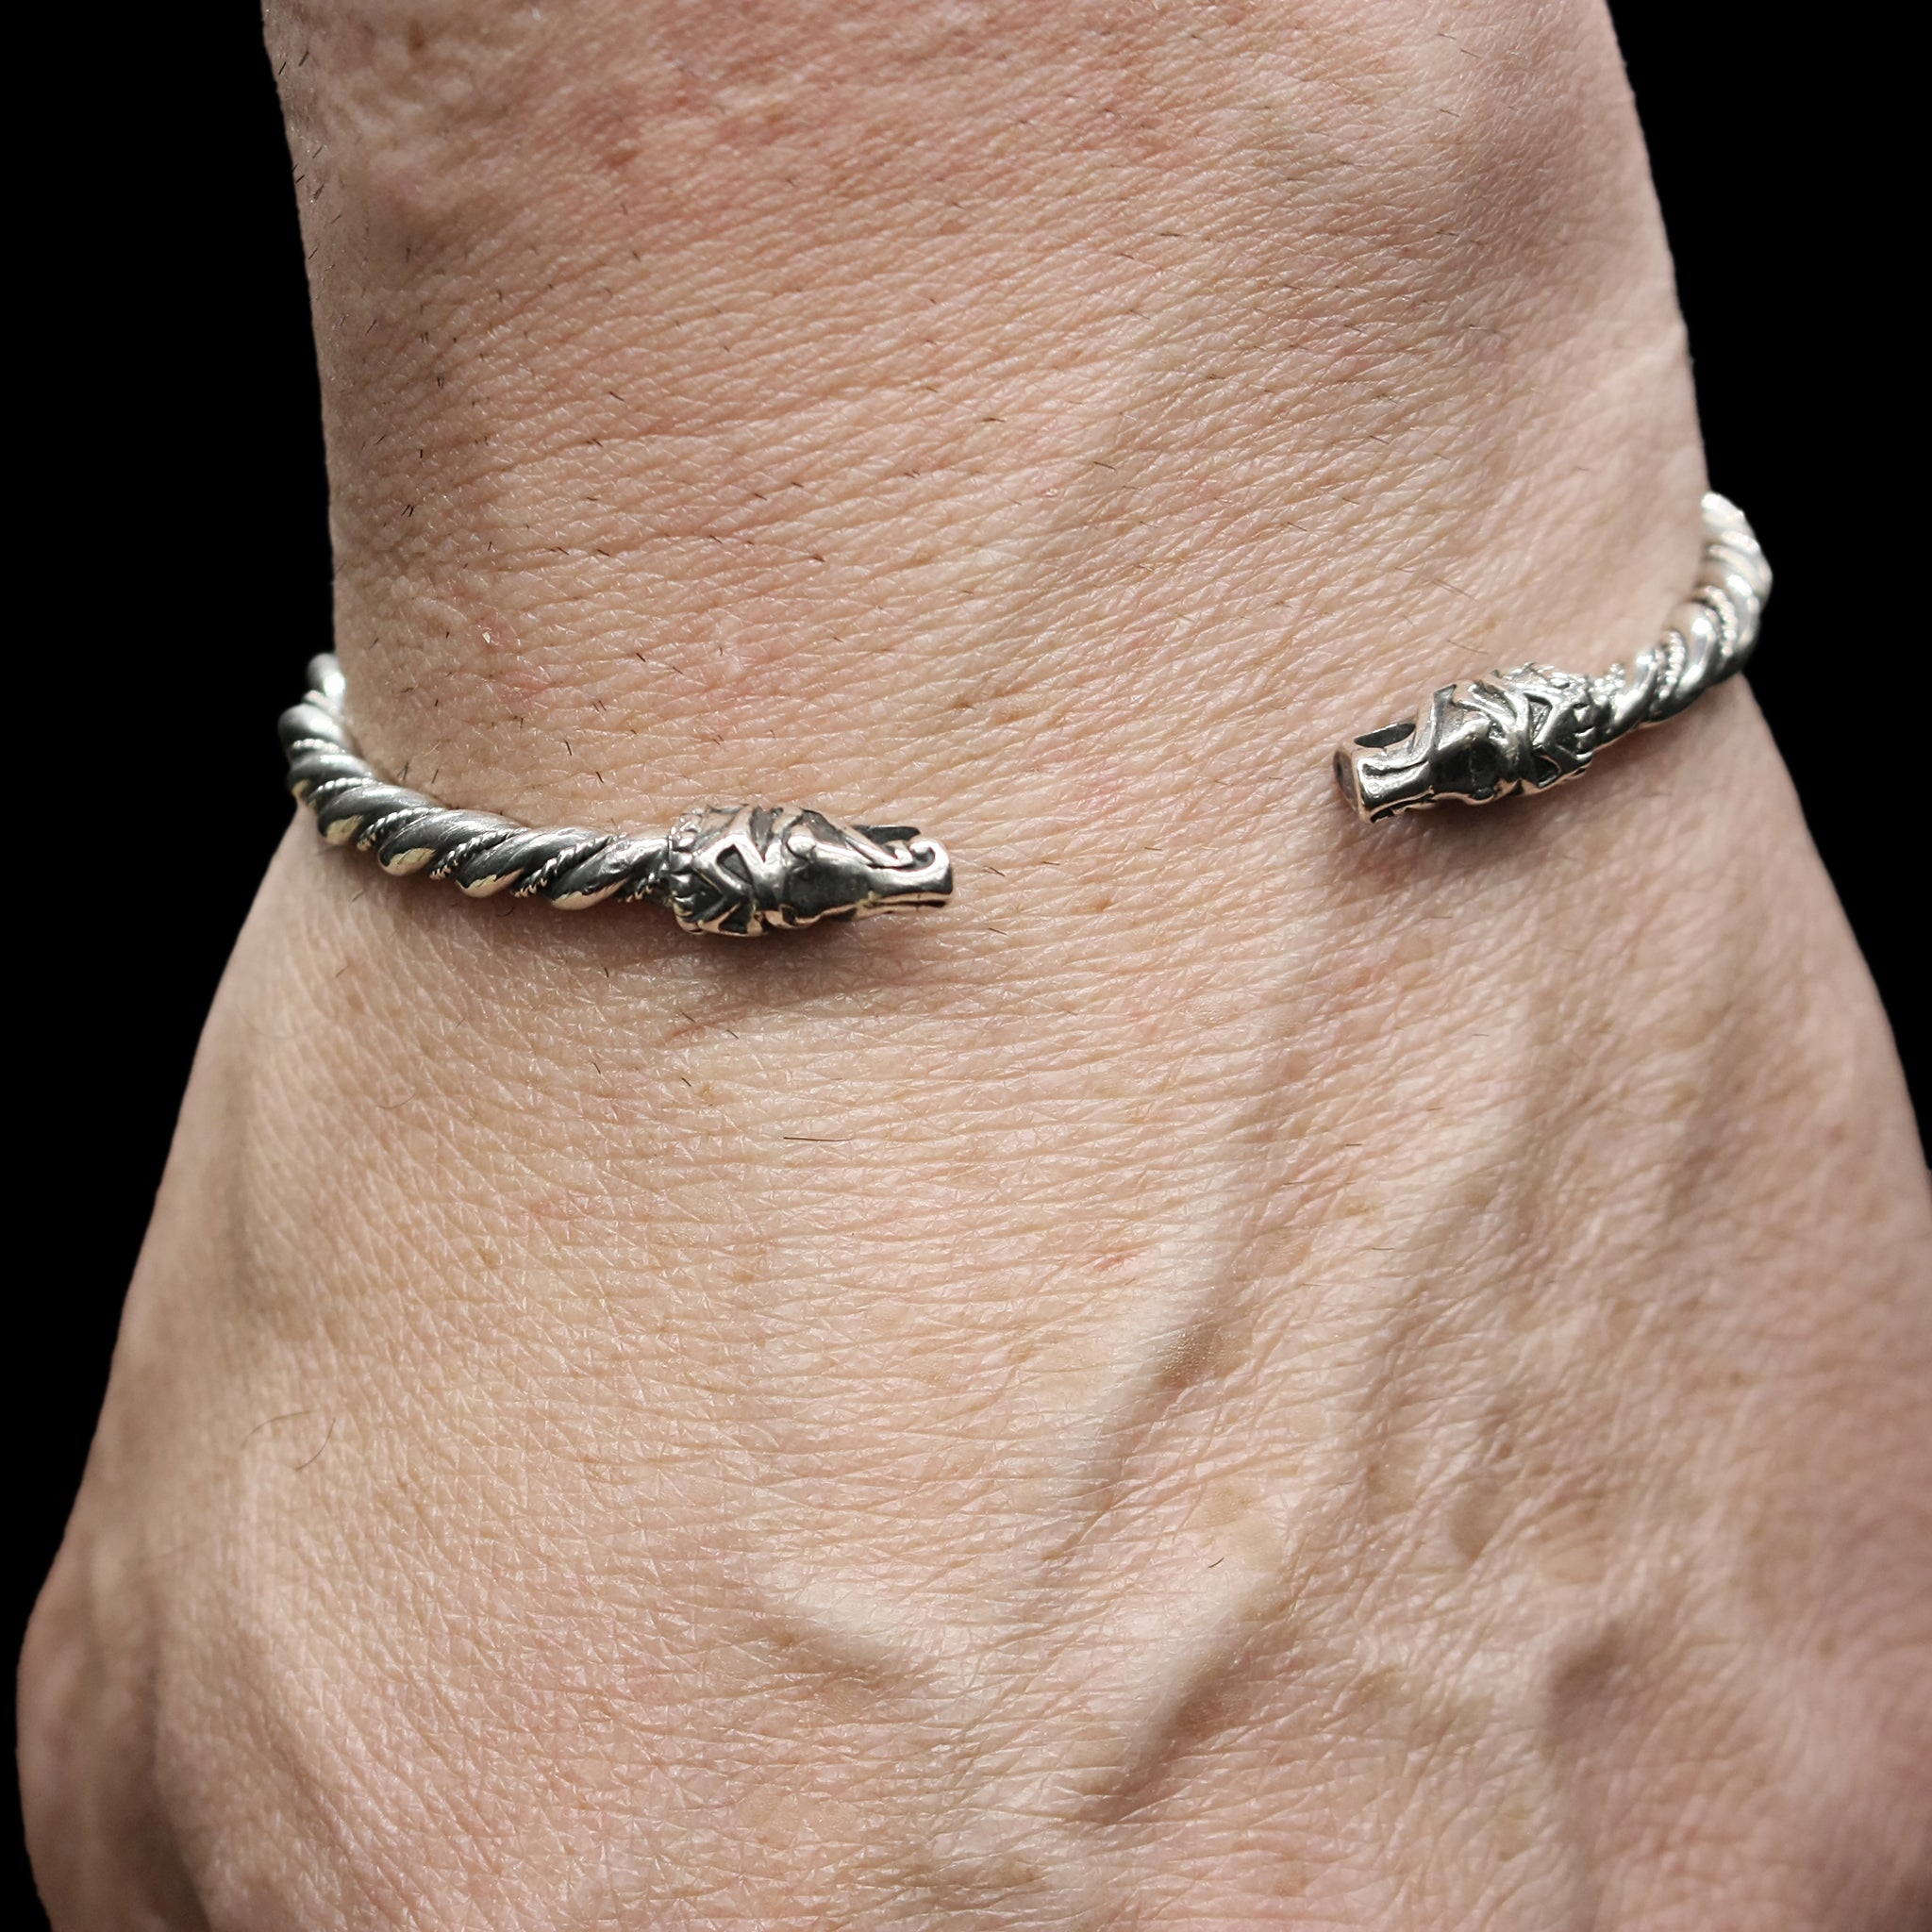 Slim Twisted Silver Bracelet With Gotlandic Dragon Heads On Wrist